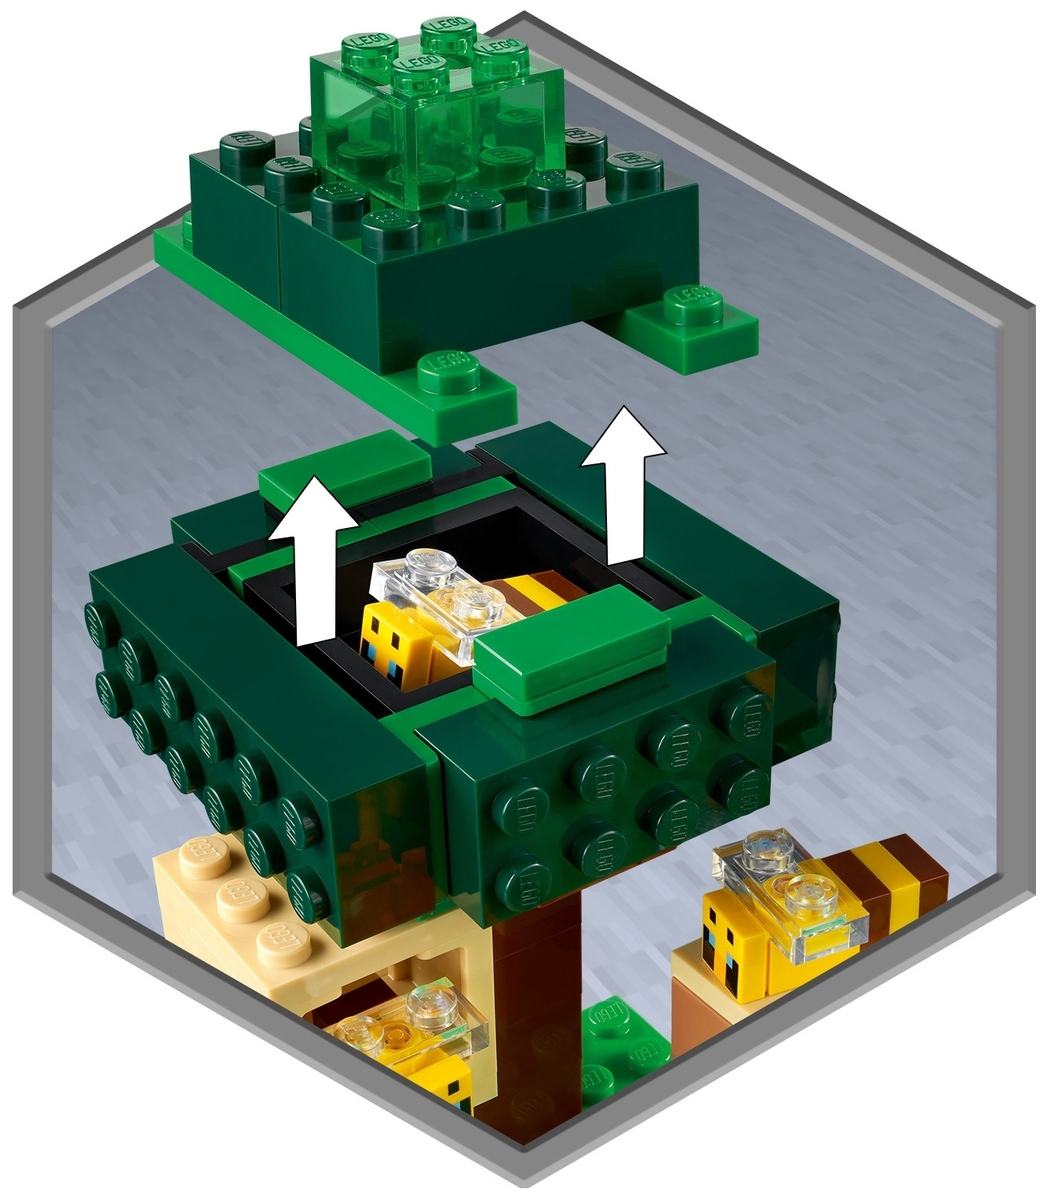 Конструктор LEGO Пчелиная ферма Minecraft 21165 Казахстан